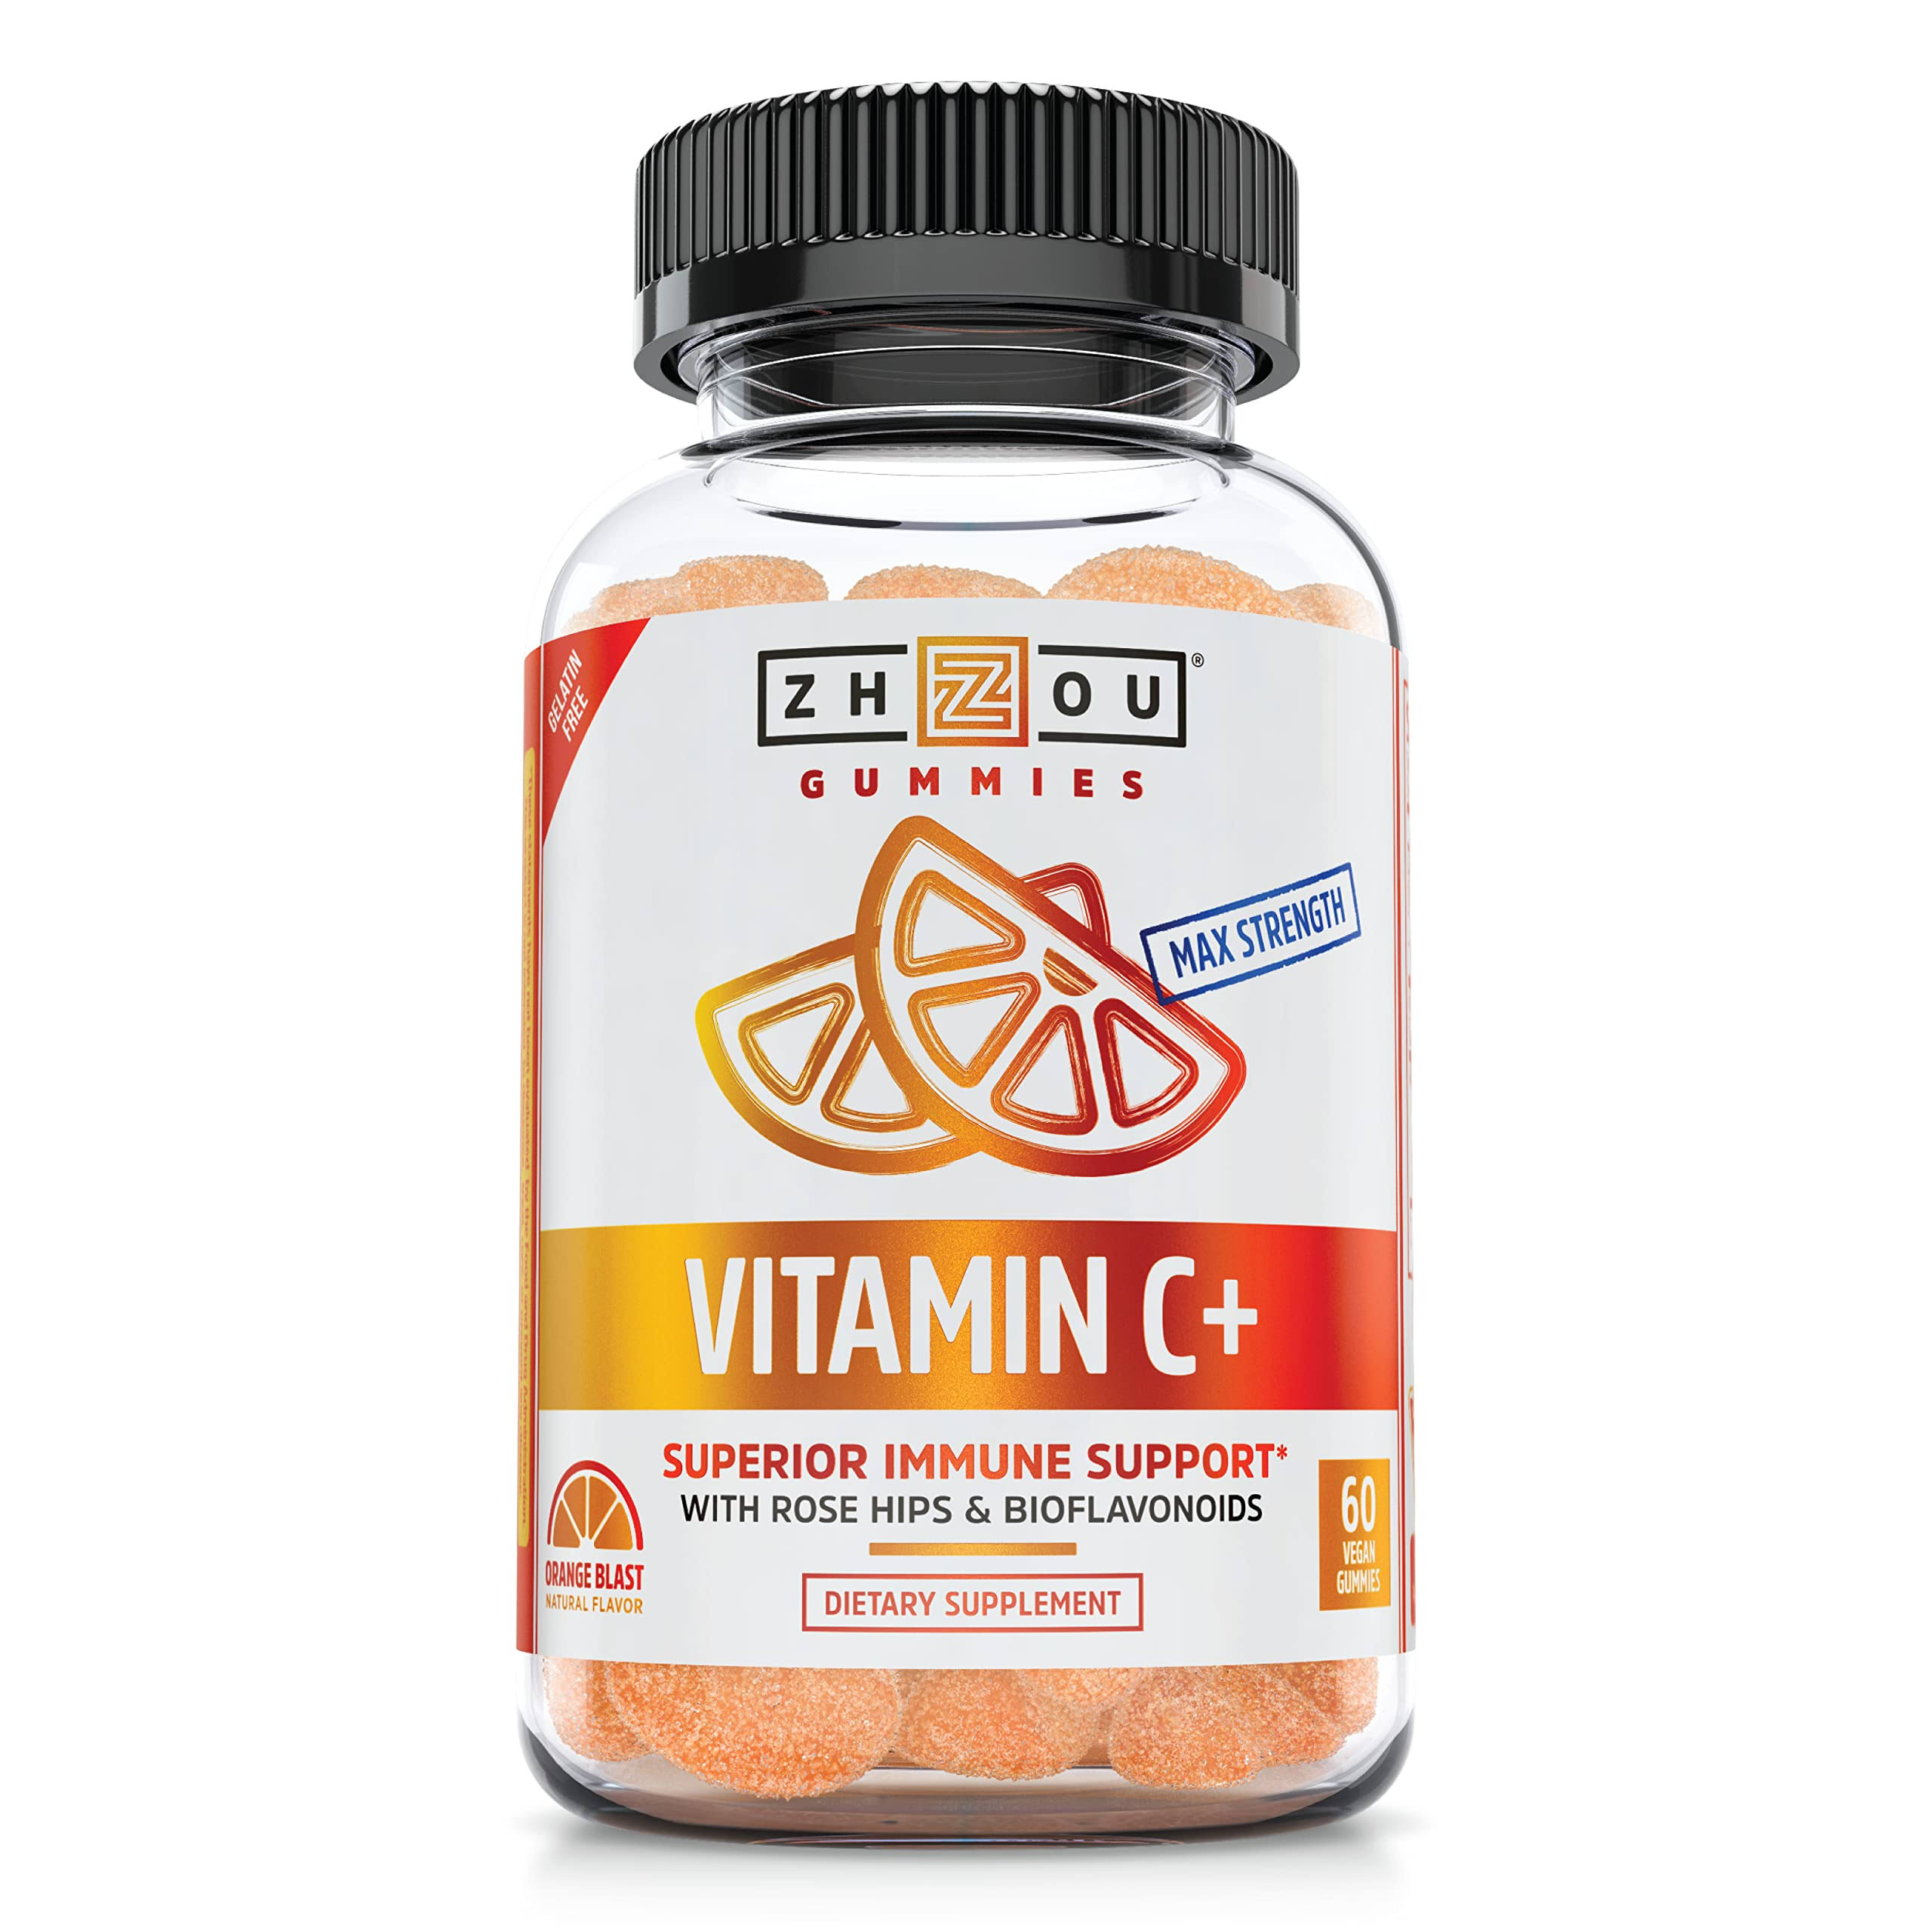 Zhou Vitamin C+ 60 Gummies (Vegan)